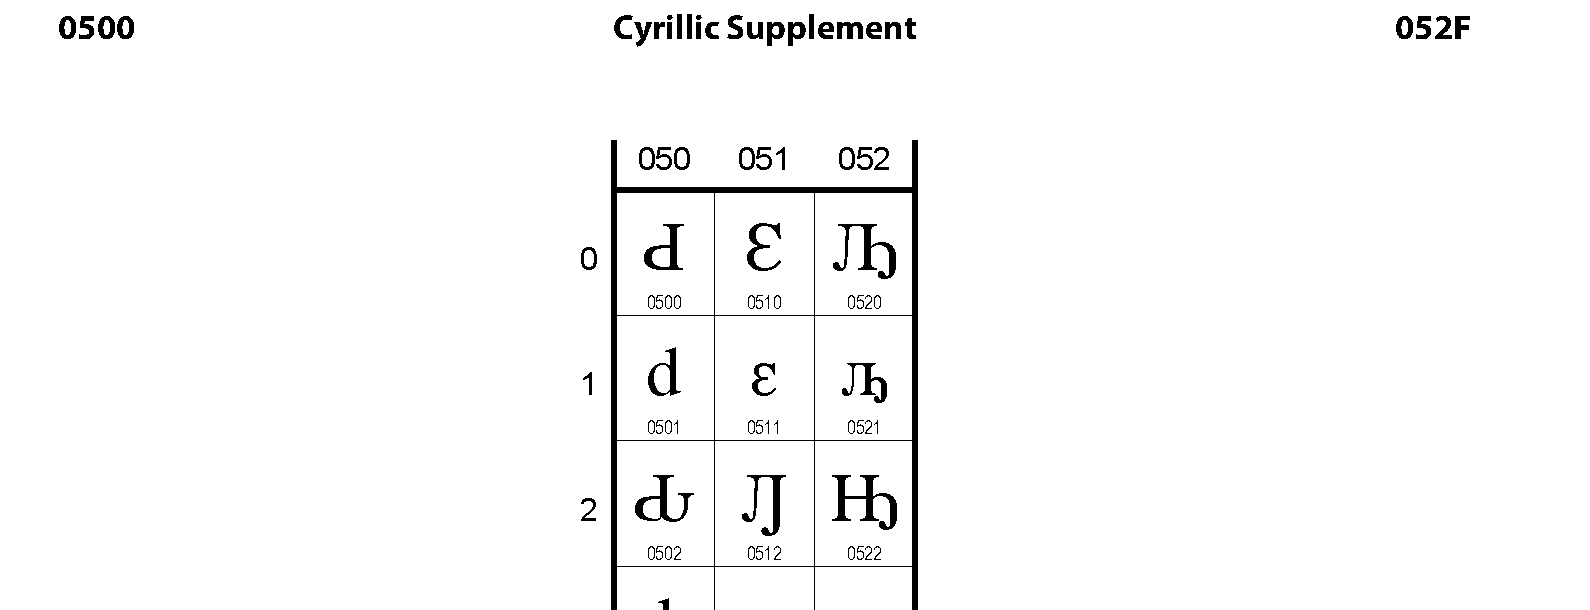 Unicode - Cyrillic Supplement